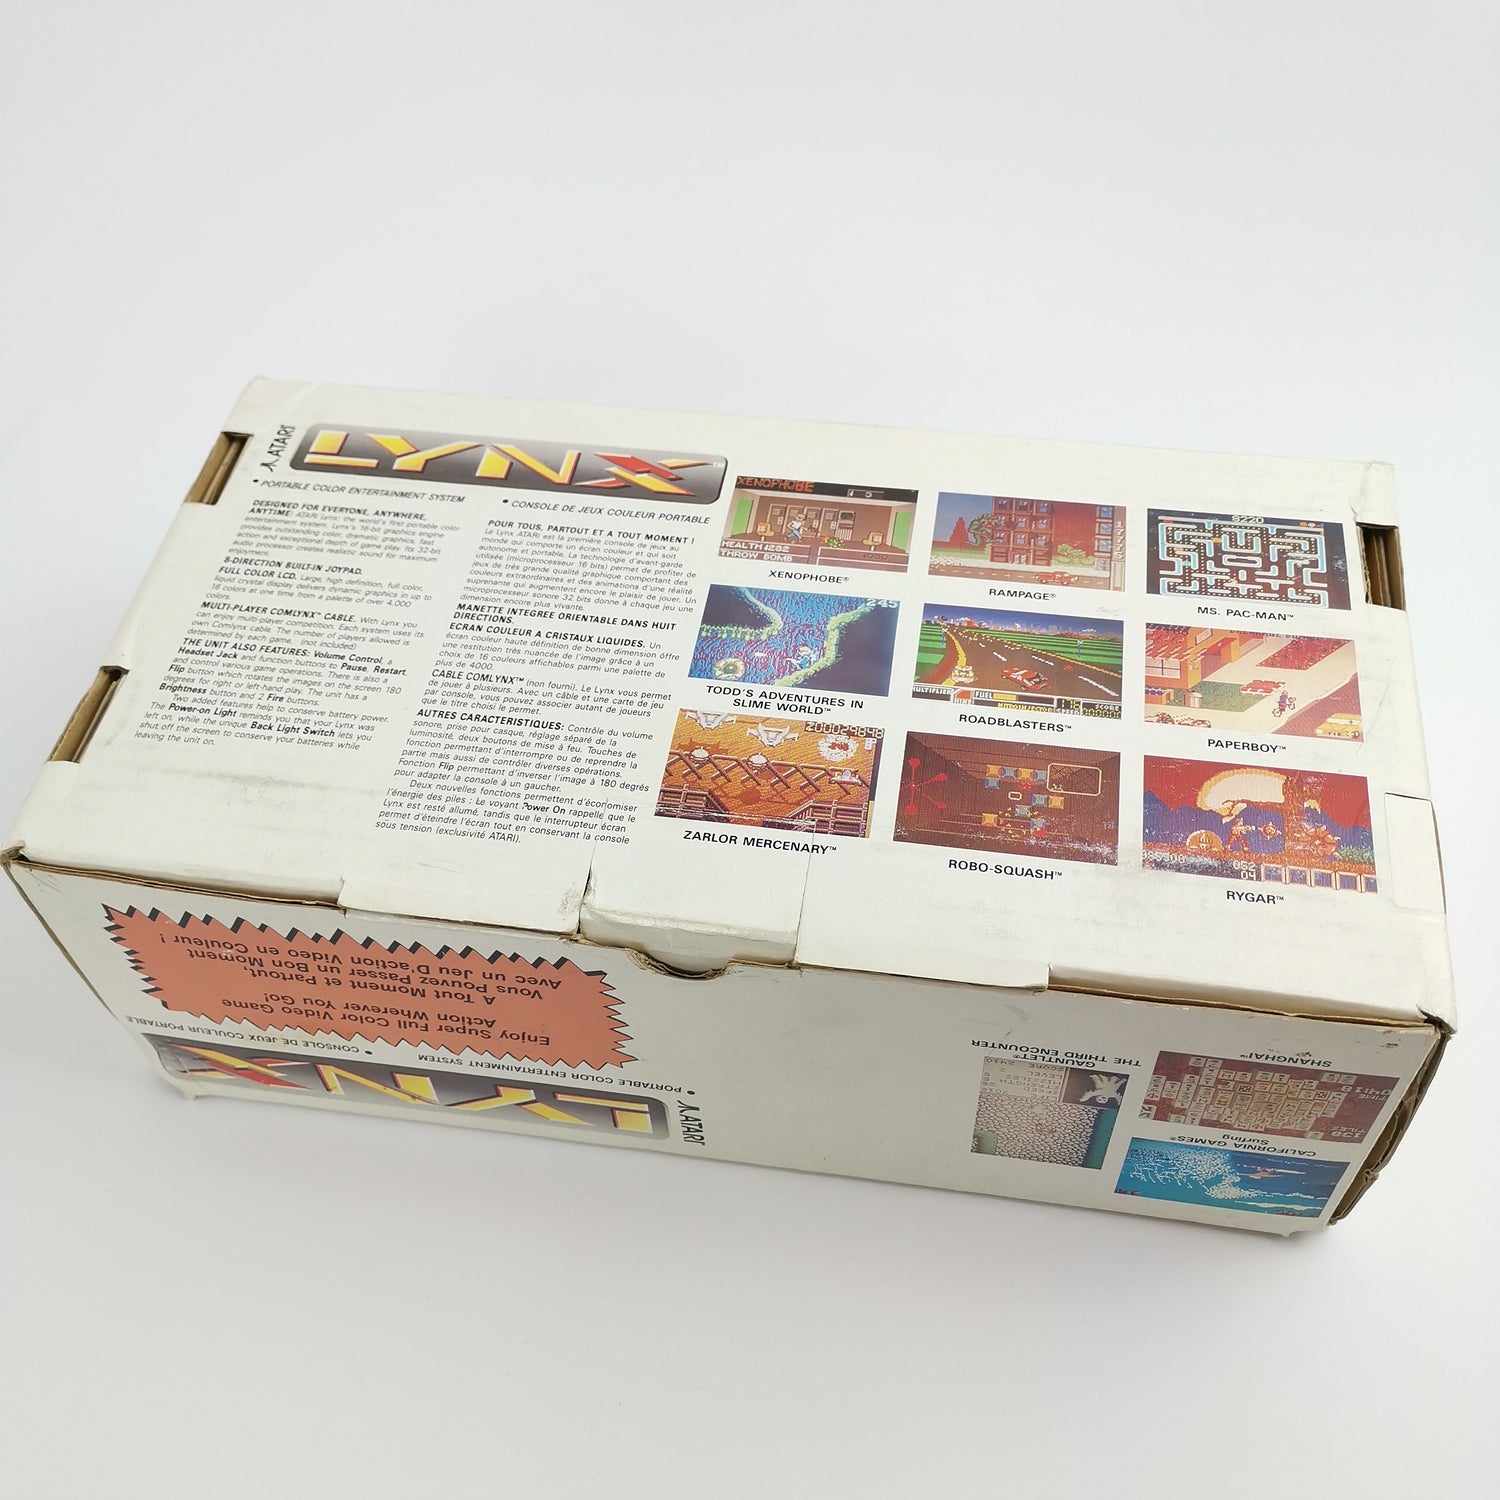 Atari Lynx 2 handheld large bundle with 14 games, 10 sealed. Original packaging